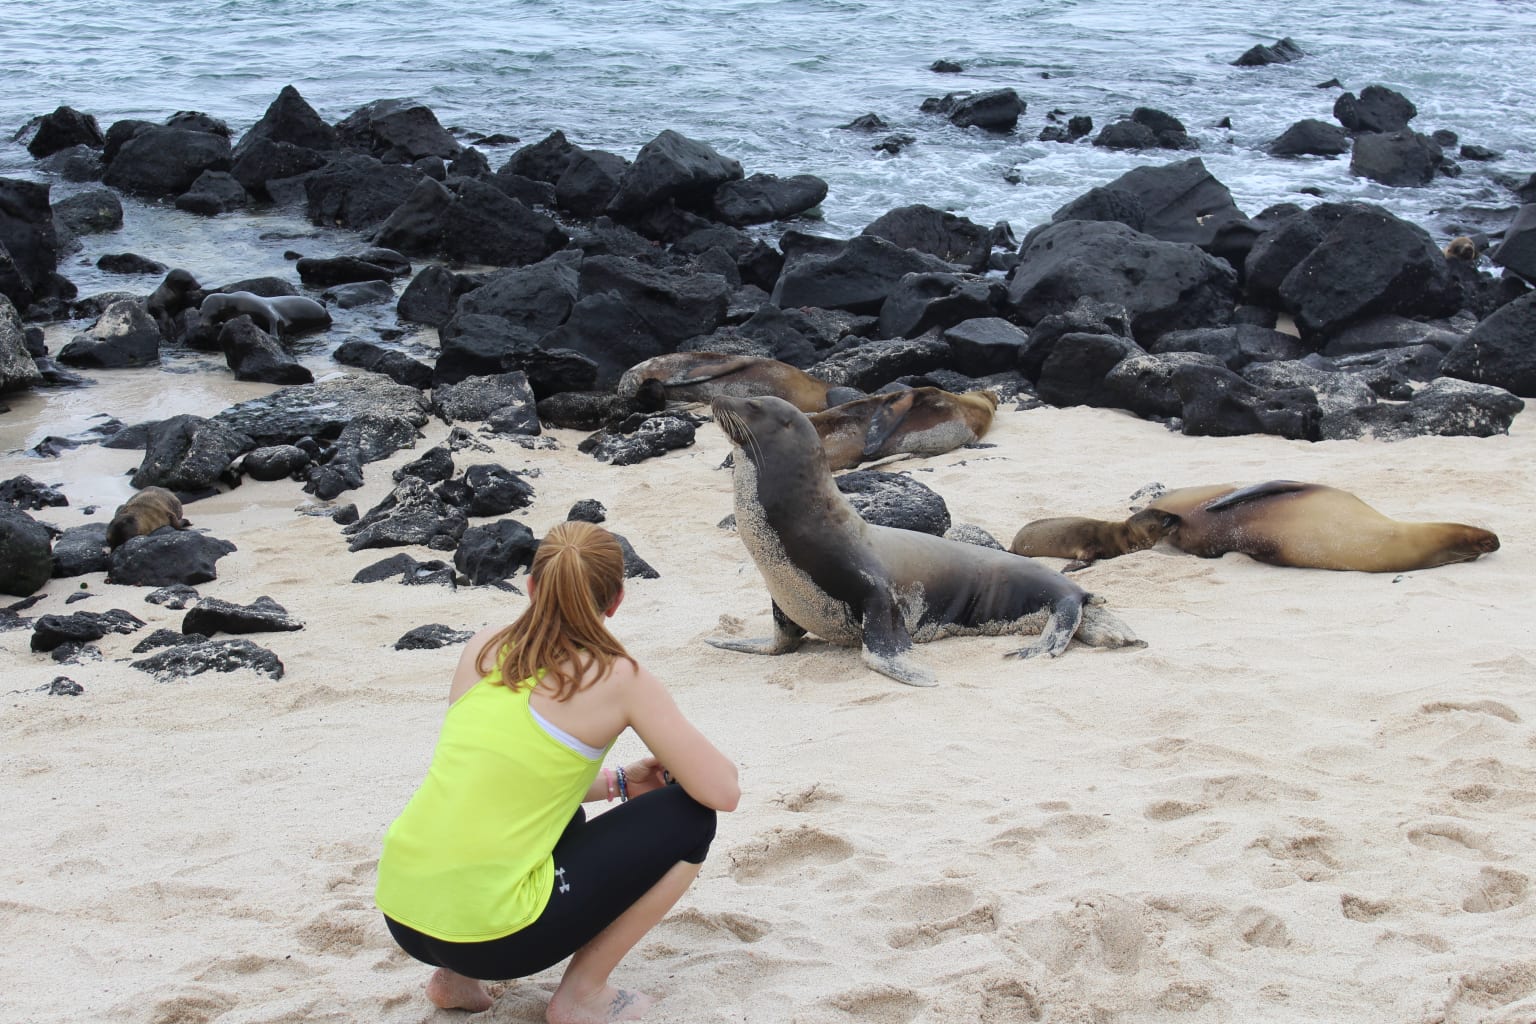 A student observing a seal on a beach in Ecuador.